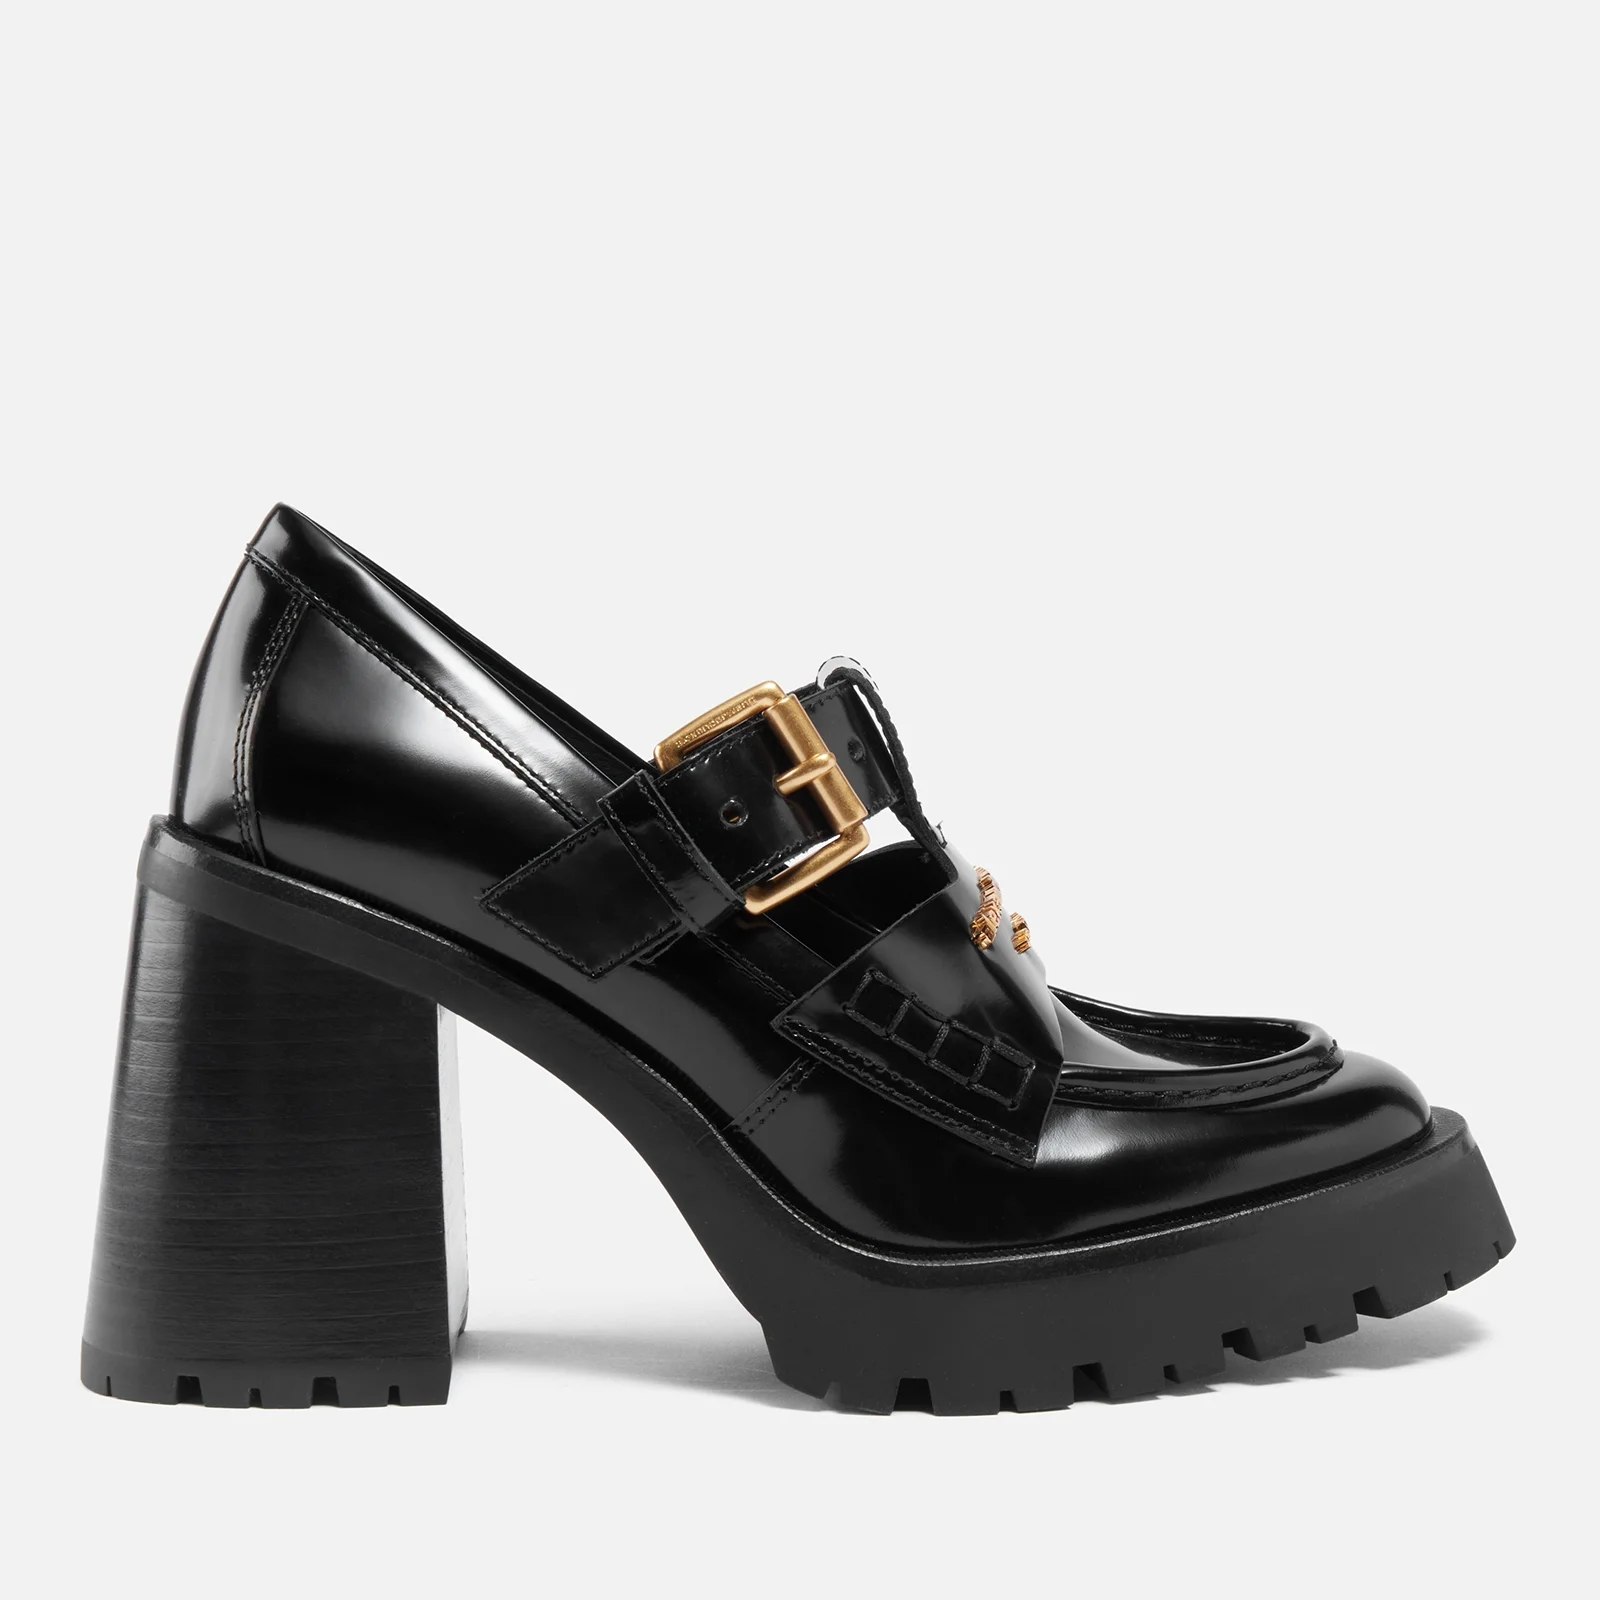 Alexander Wang Women's Carter Platform Leather Loafers Image 1